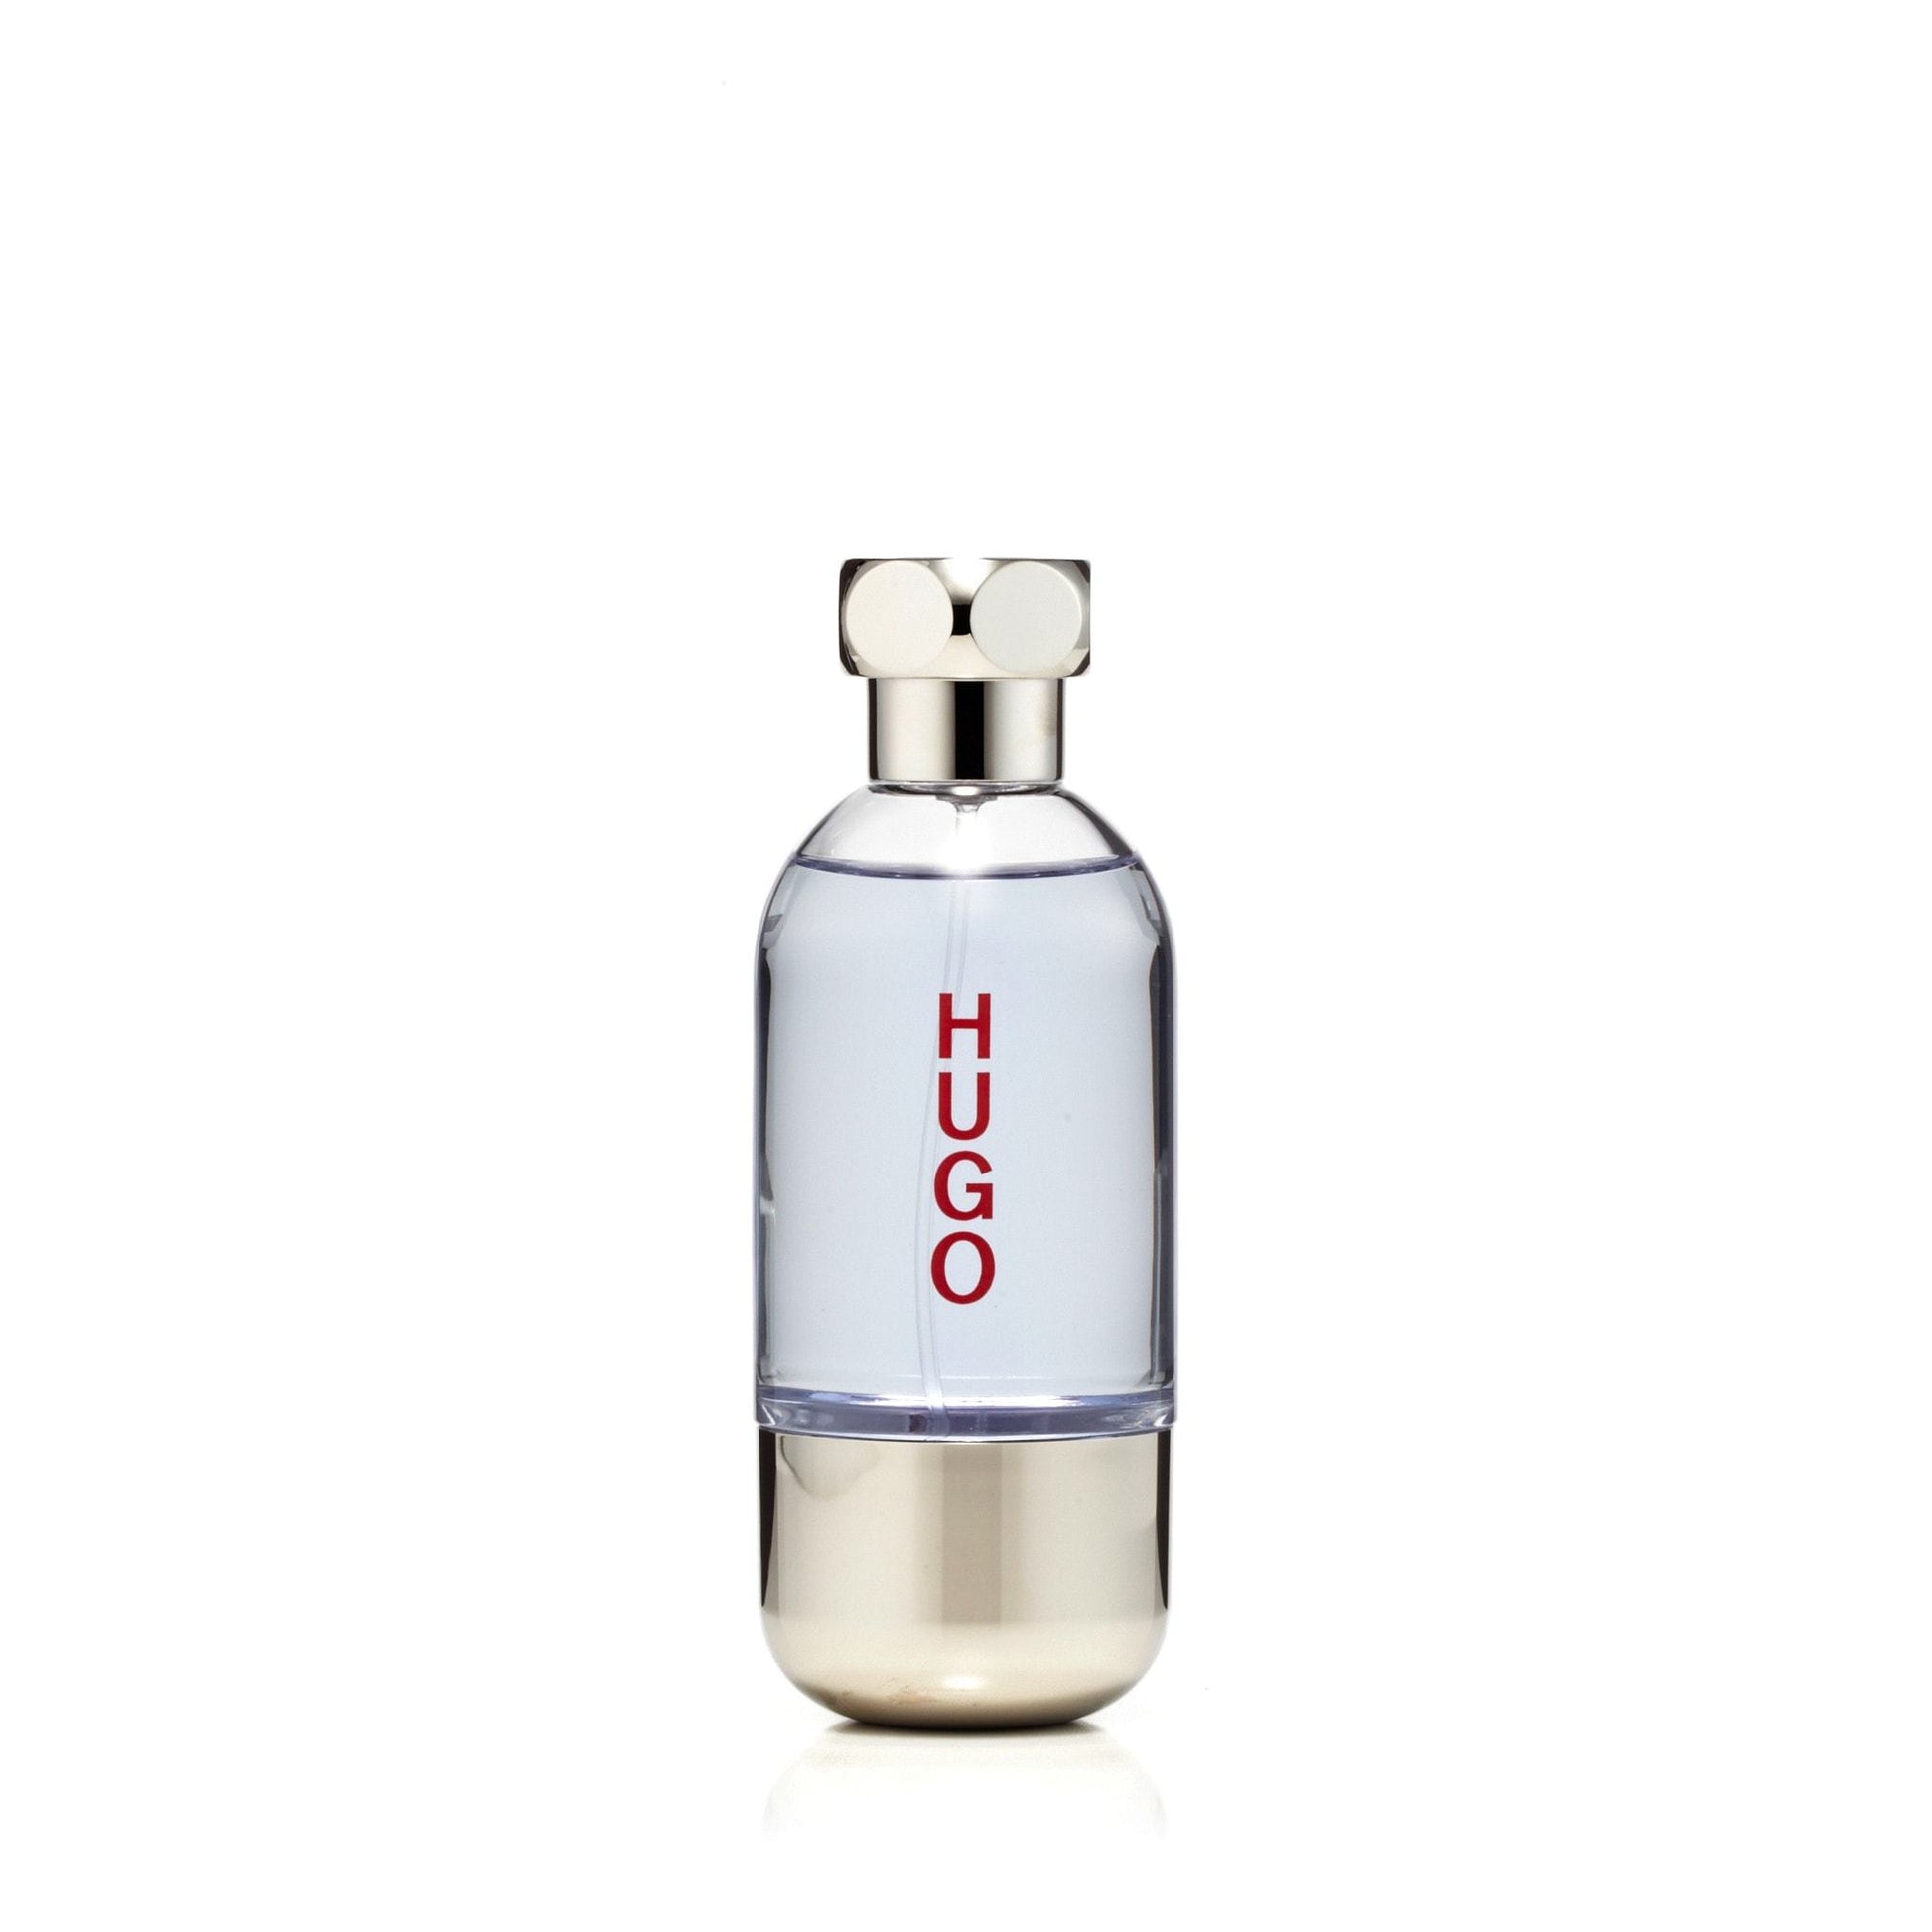 Hugo Boss Element Eau de Toilette Spray for Men by Hugo Boss, Product image 1